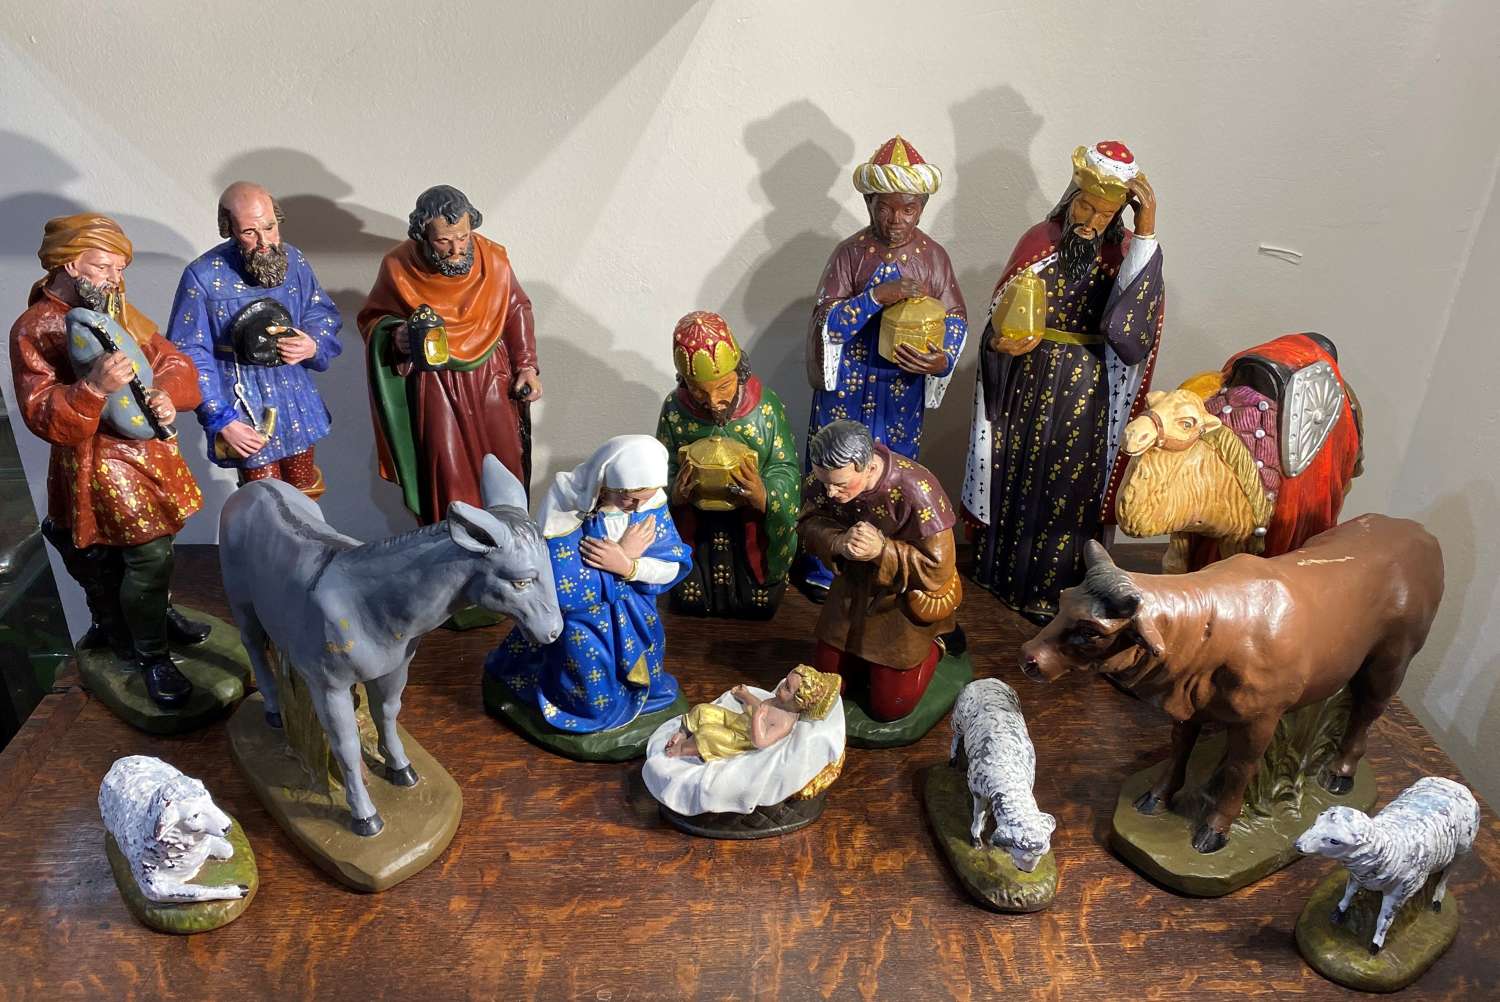 Large Fifteen Piece Hand Painted Plaster Nativity Scene